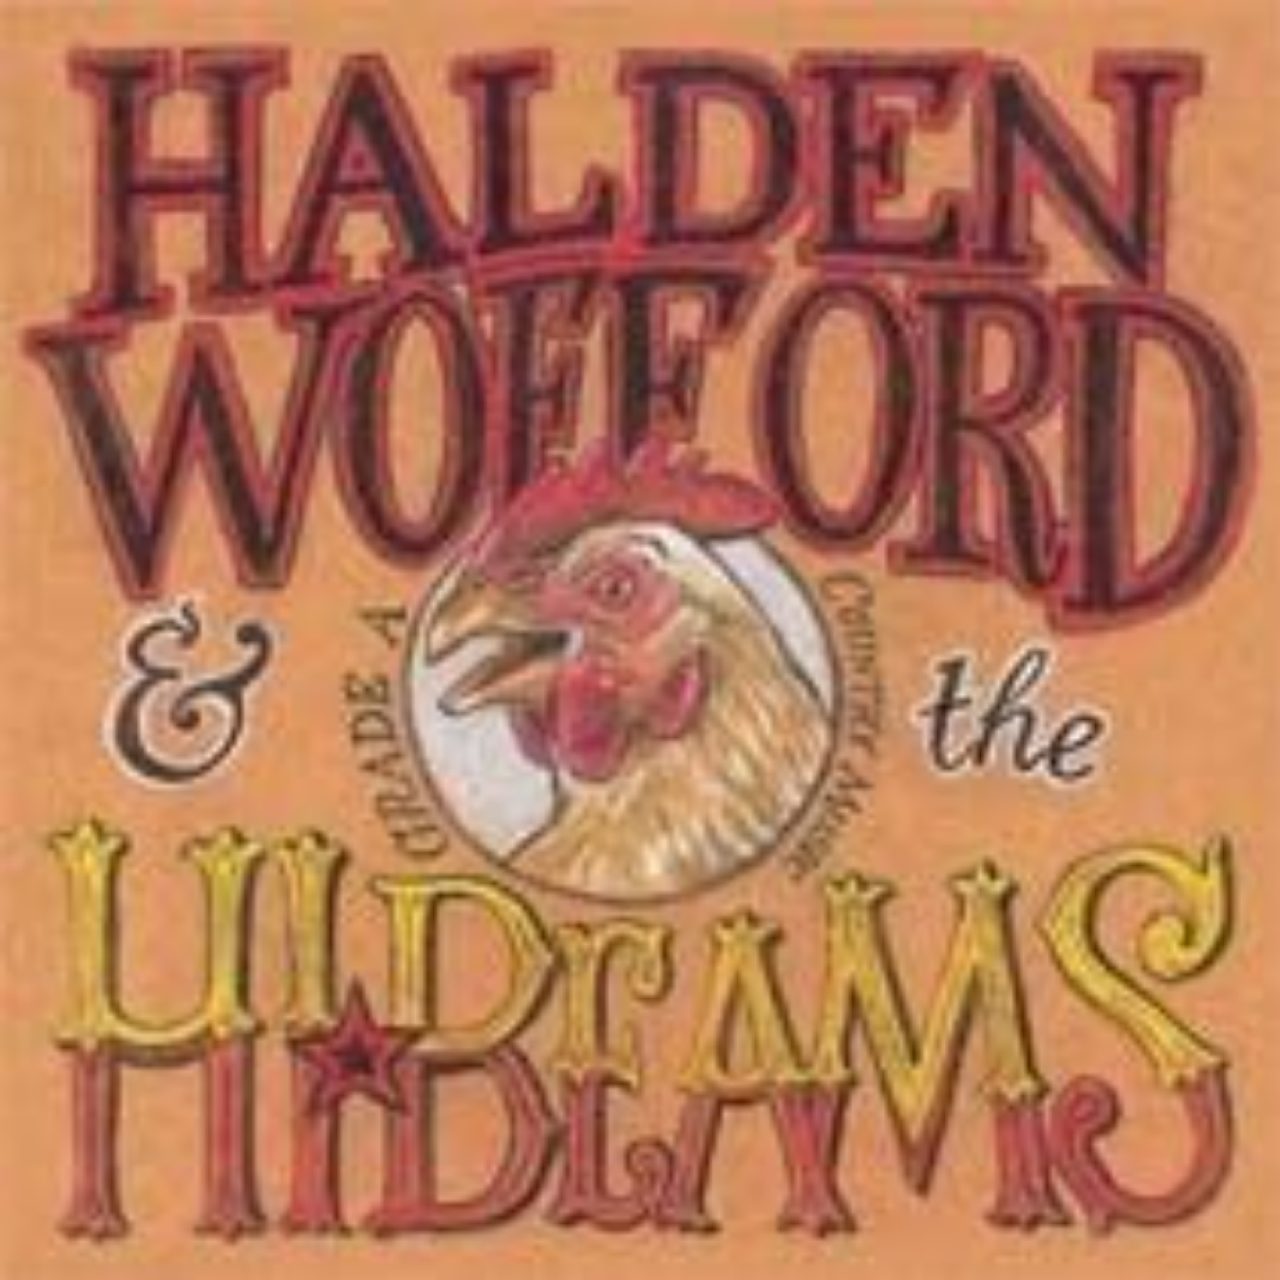 Halden Wofford & The Hi-Beams cover album